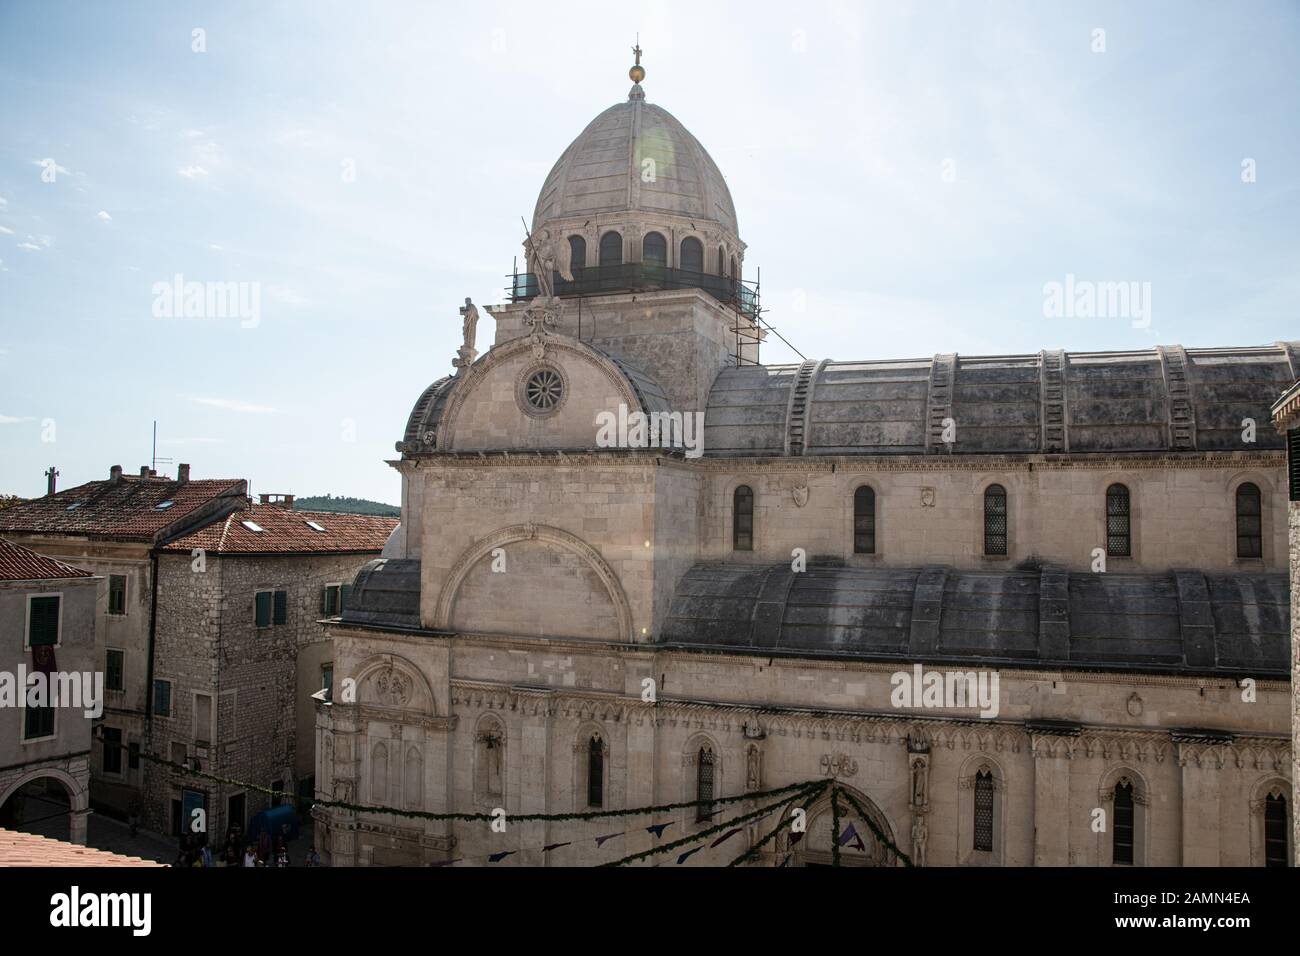 Game of Thrones filming locations in Dubrovnik, Croatia Stock Photo